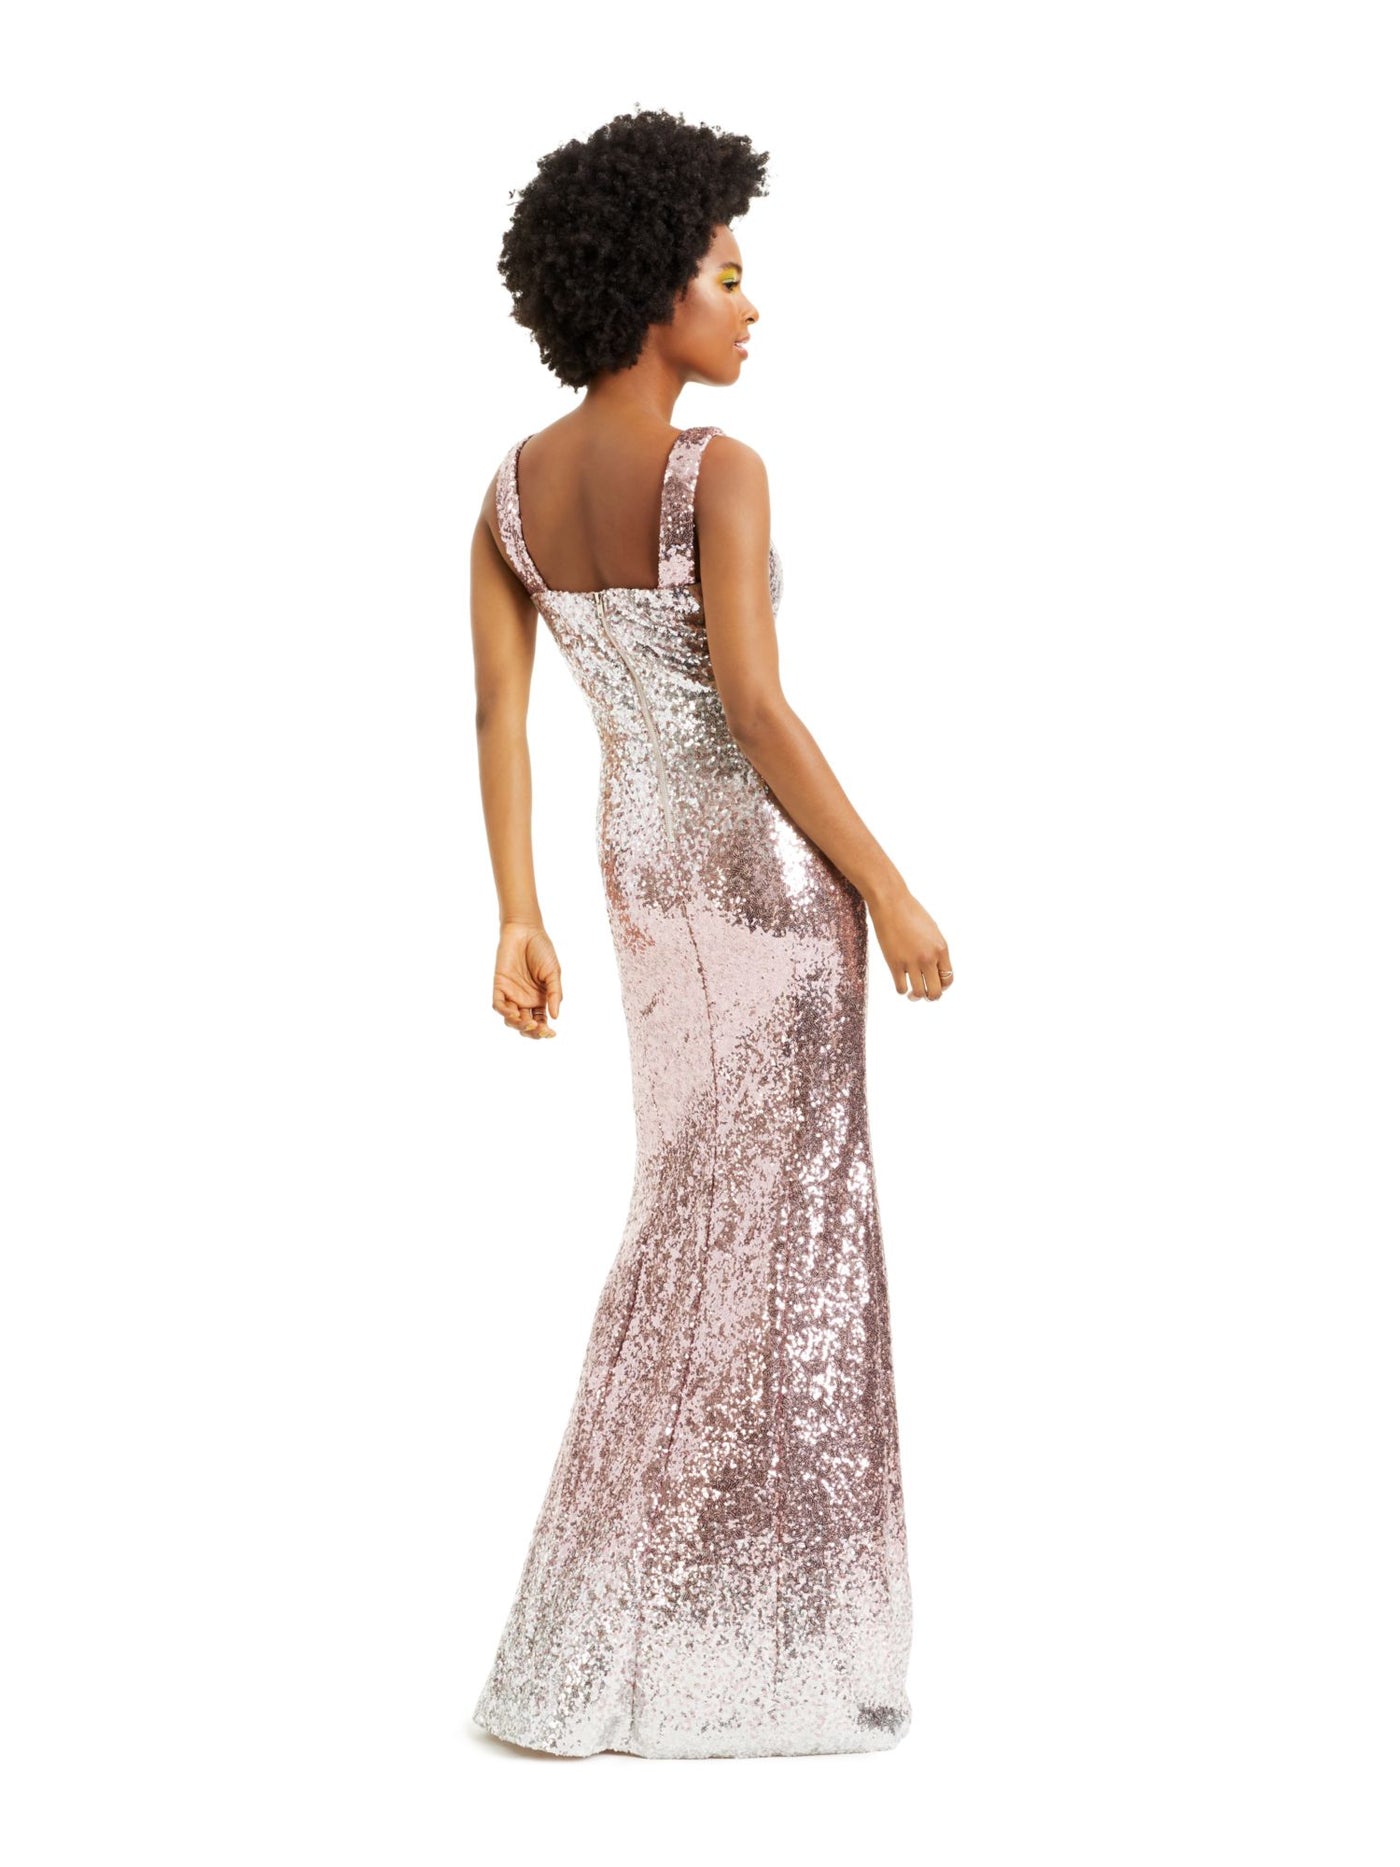 CRYSTAL DOLLS Womens Sequined Low Back Sleeveless V Neck Full-Length Prom Body Con Dress